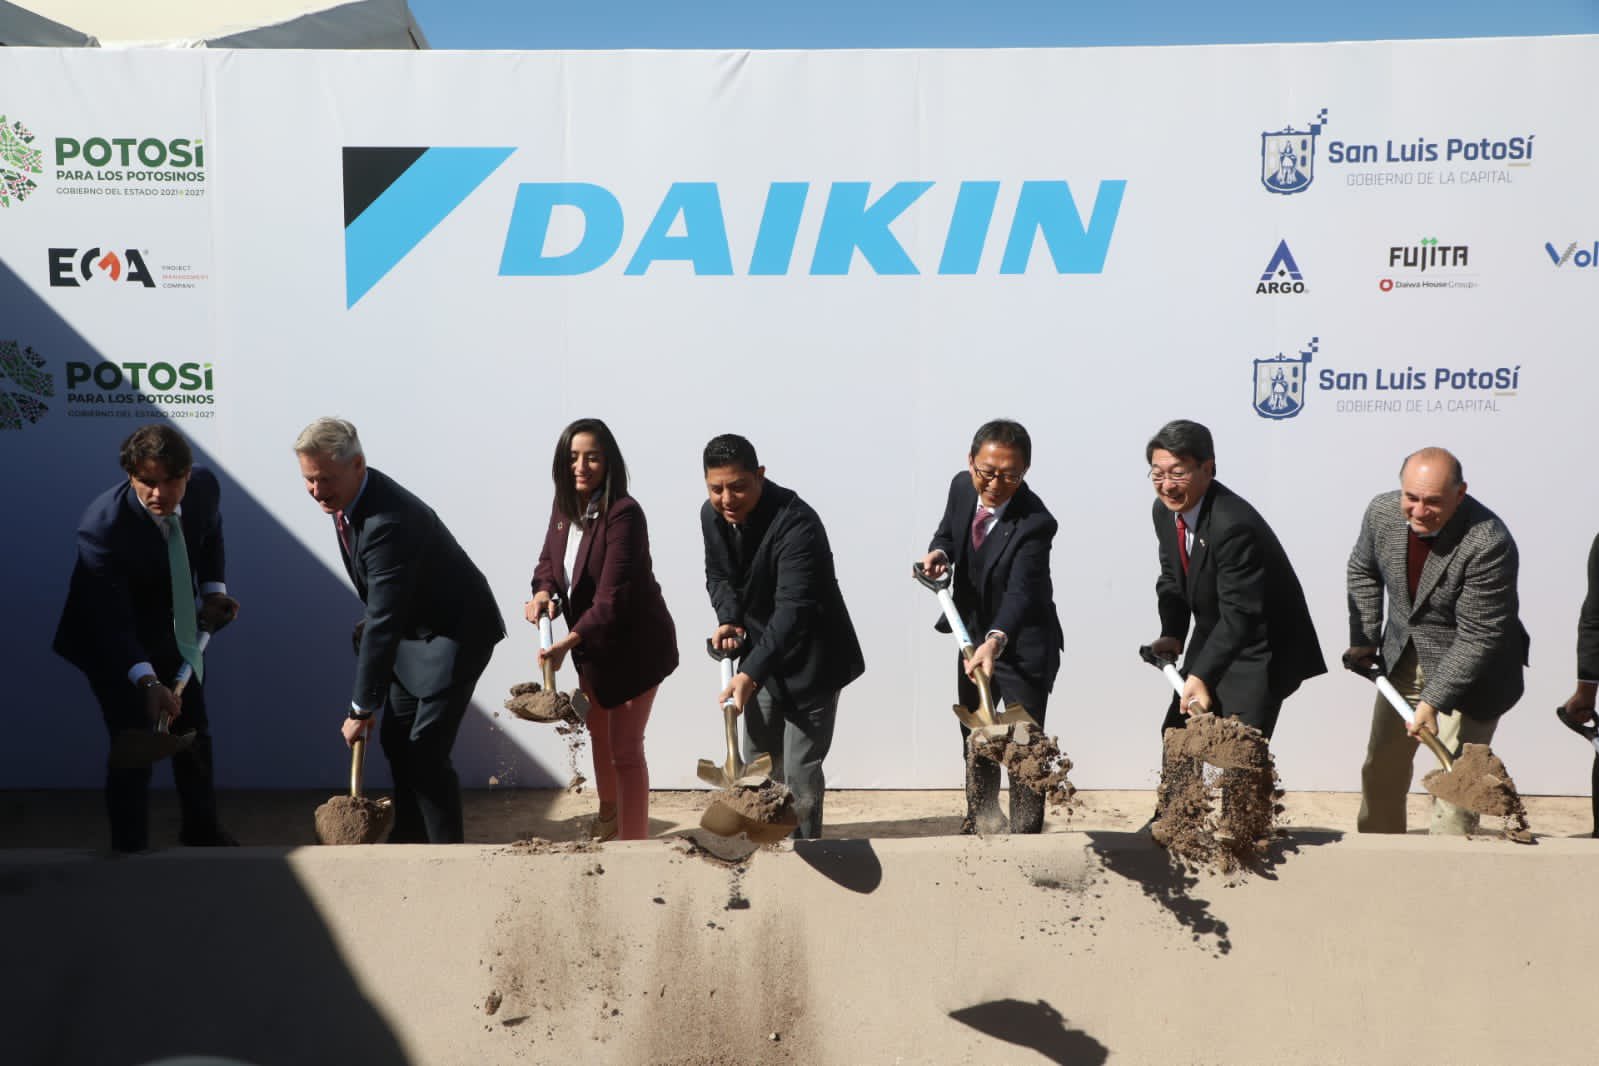 Daikin to build two new plants in SLP